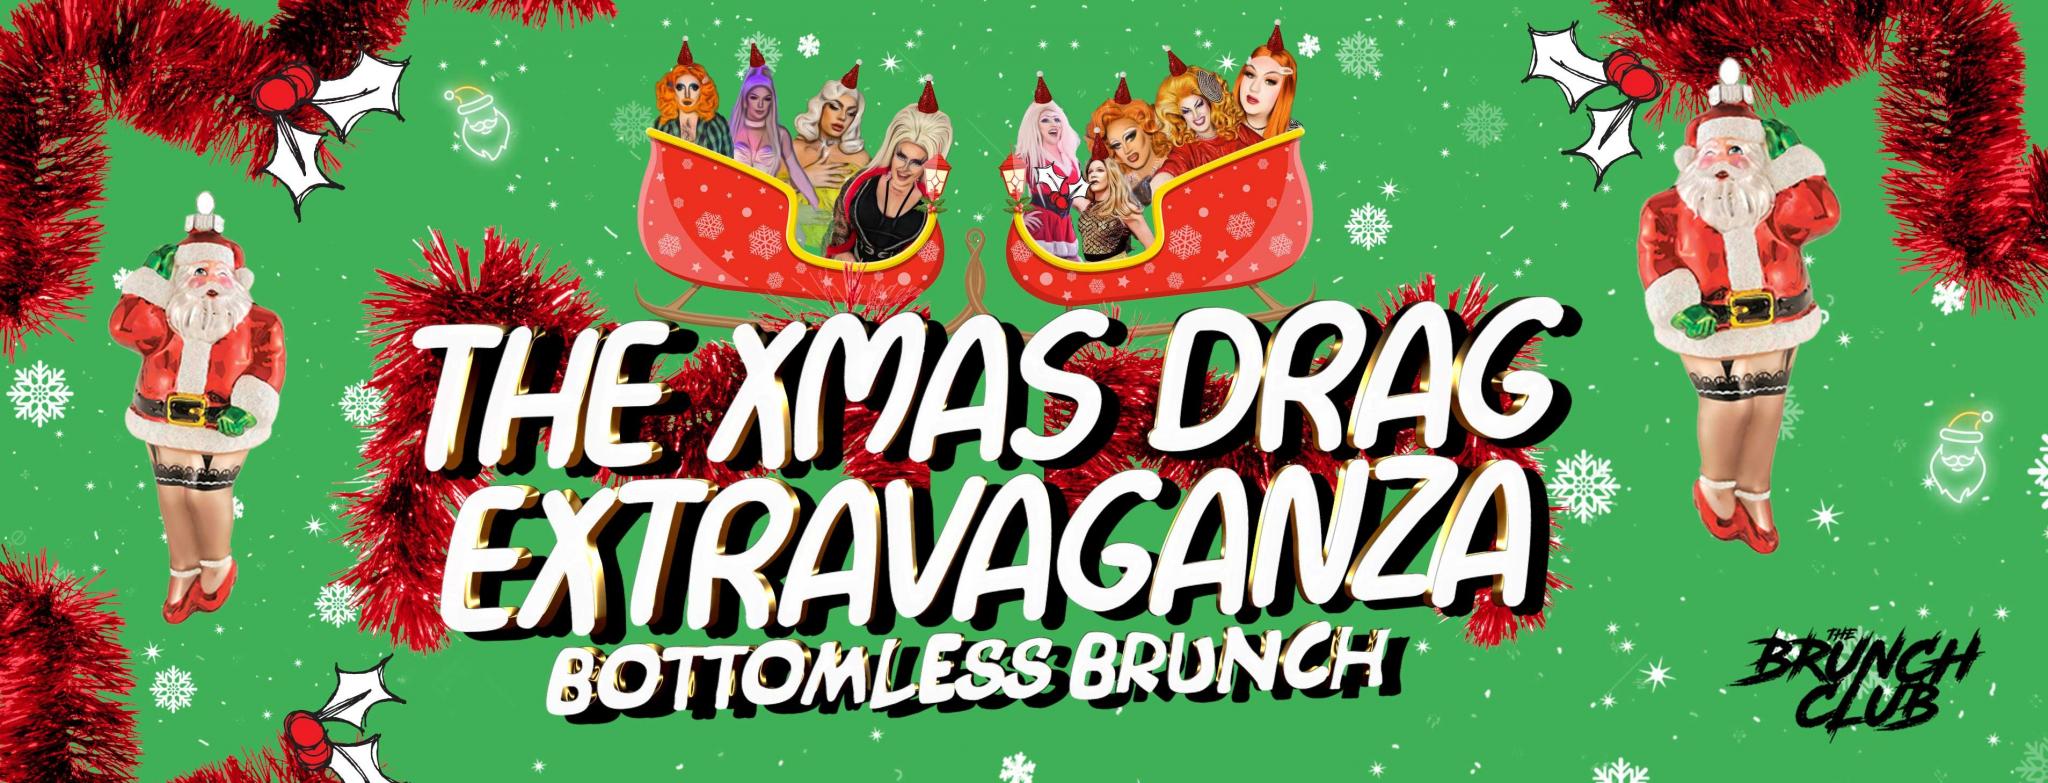 The Xmas Drag Extravaganza Bottomless Brunch - Swansea